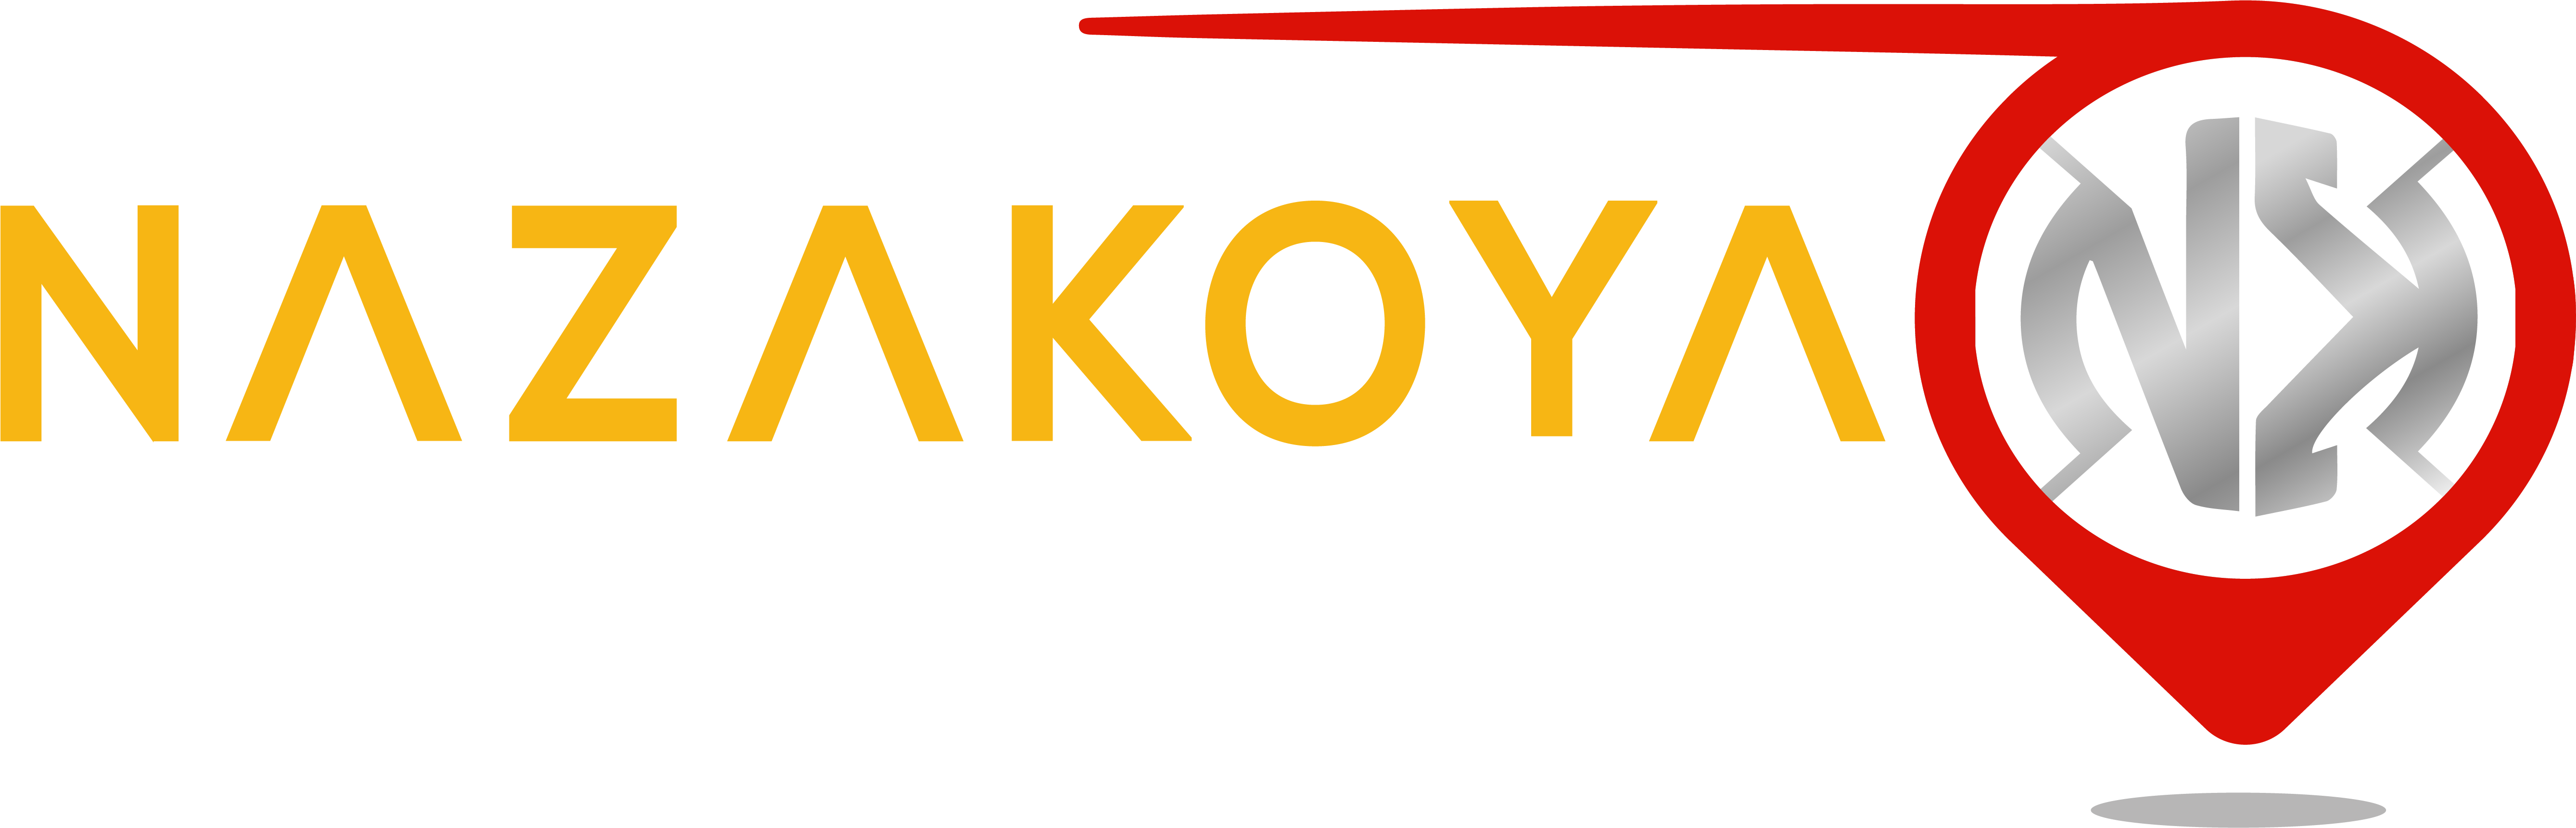 Nazakoya